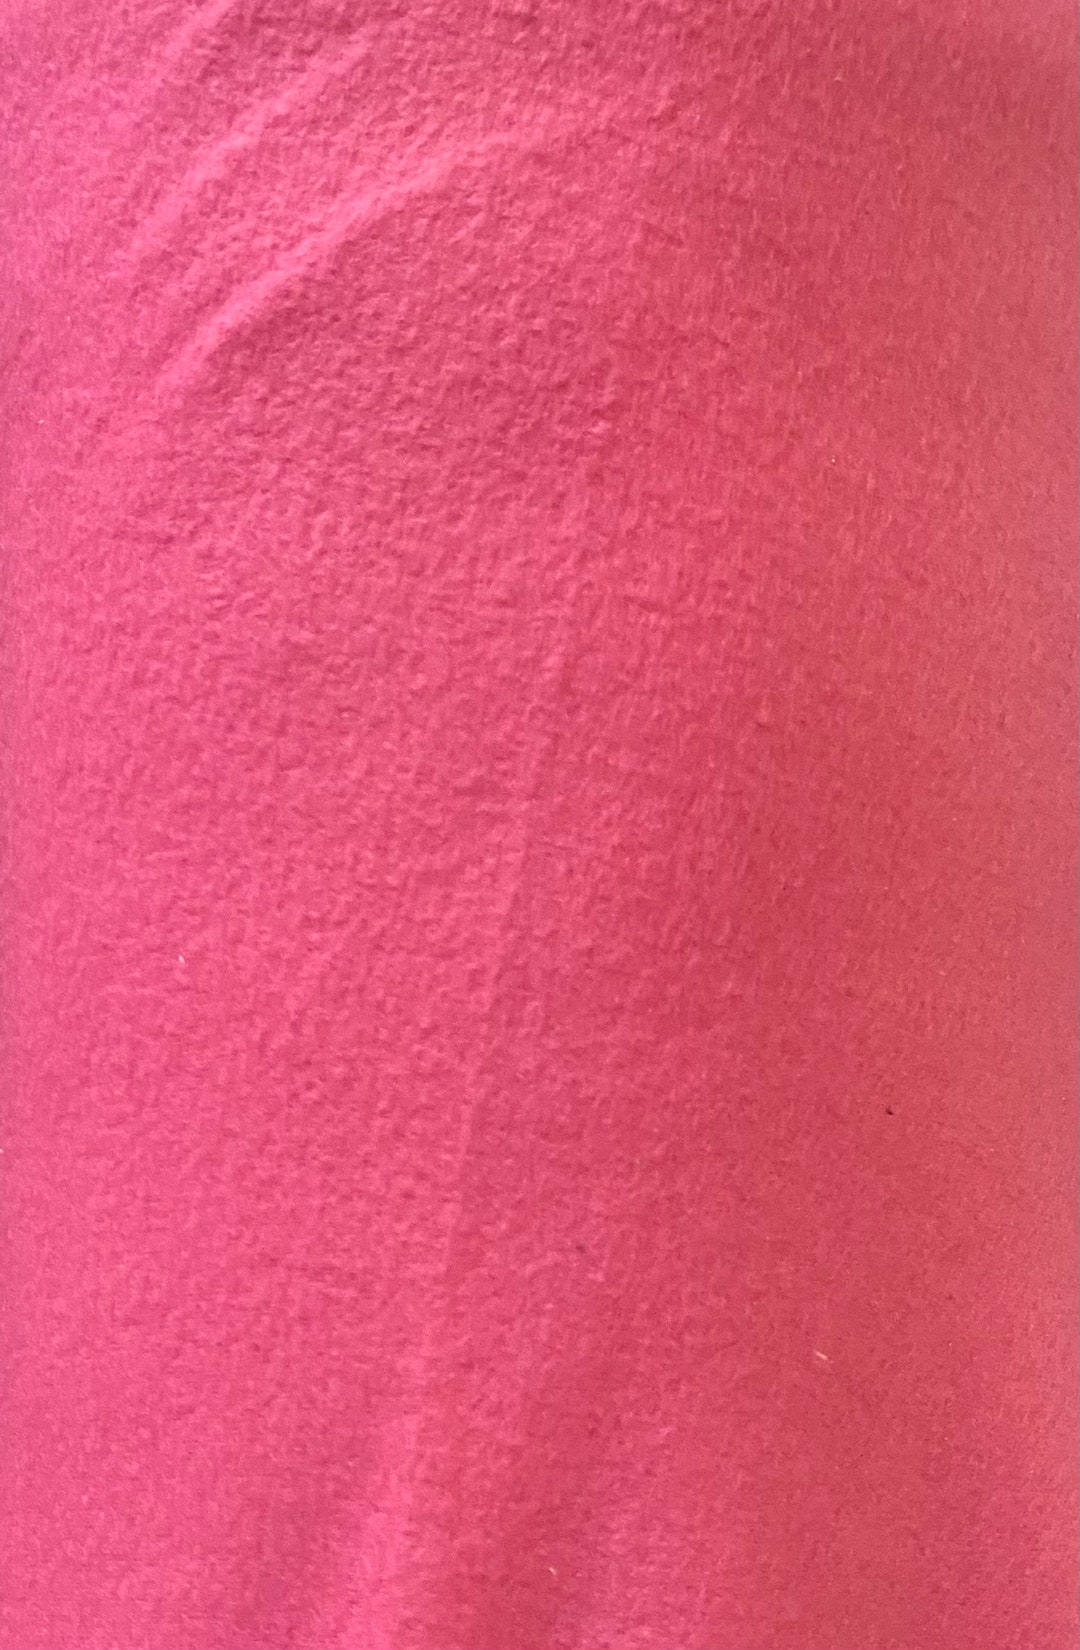 Fleece Solid Polar Fleece Fabric Hot Pink Sold by the Yard 60 Wide ...